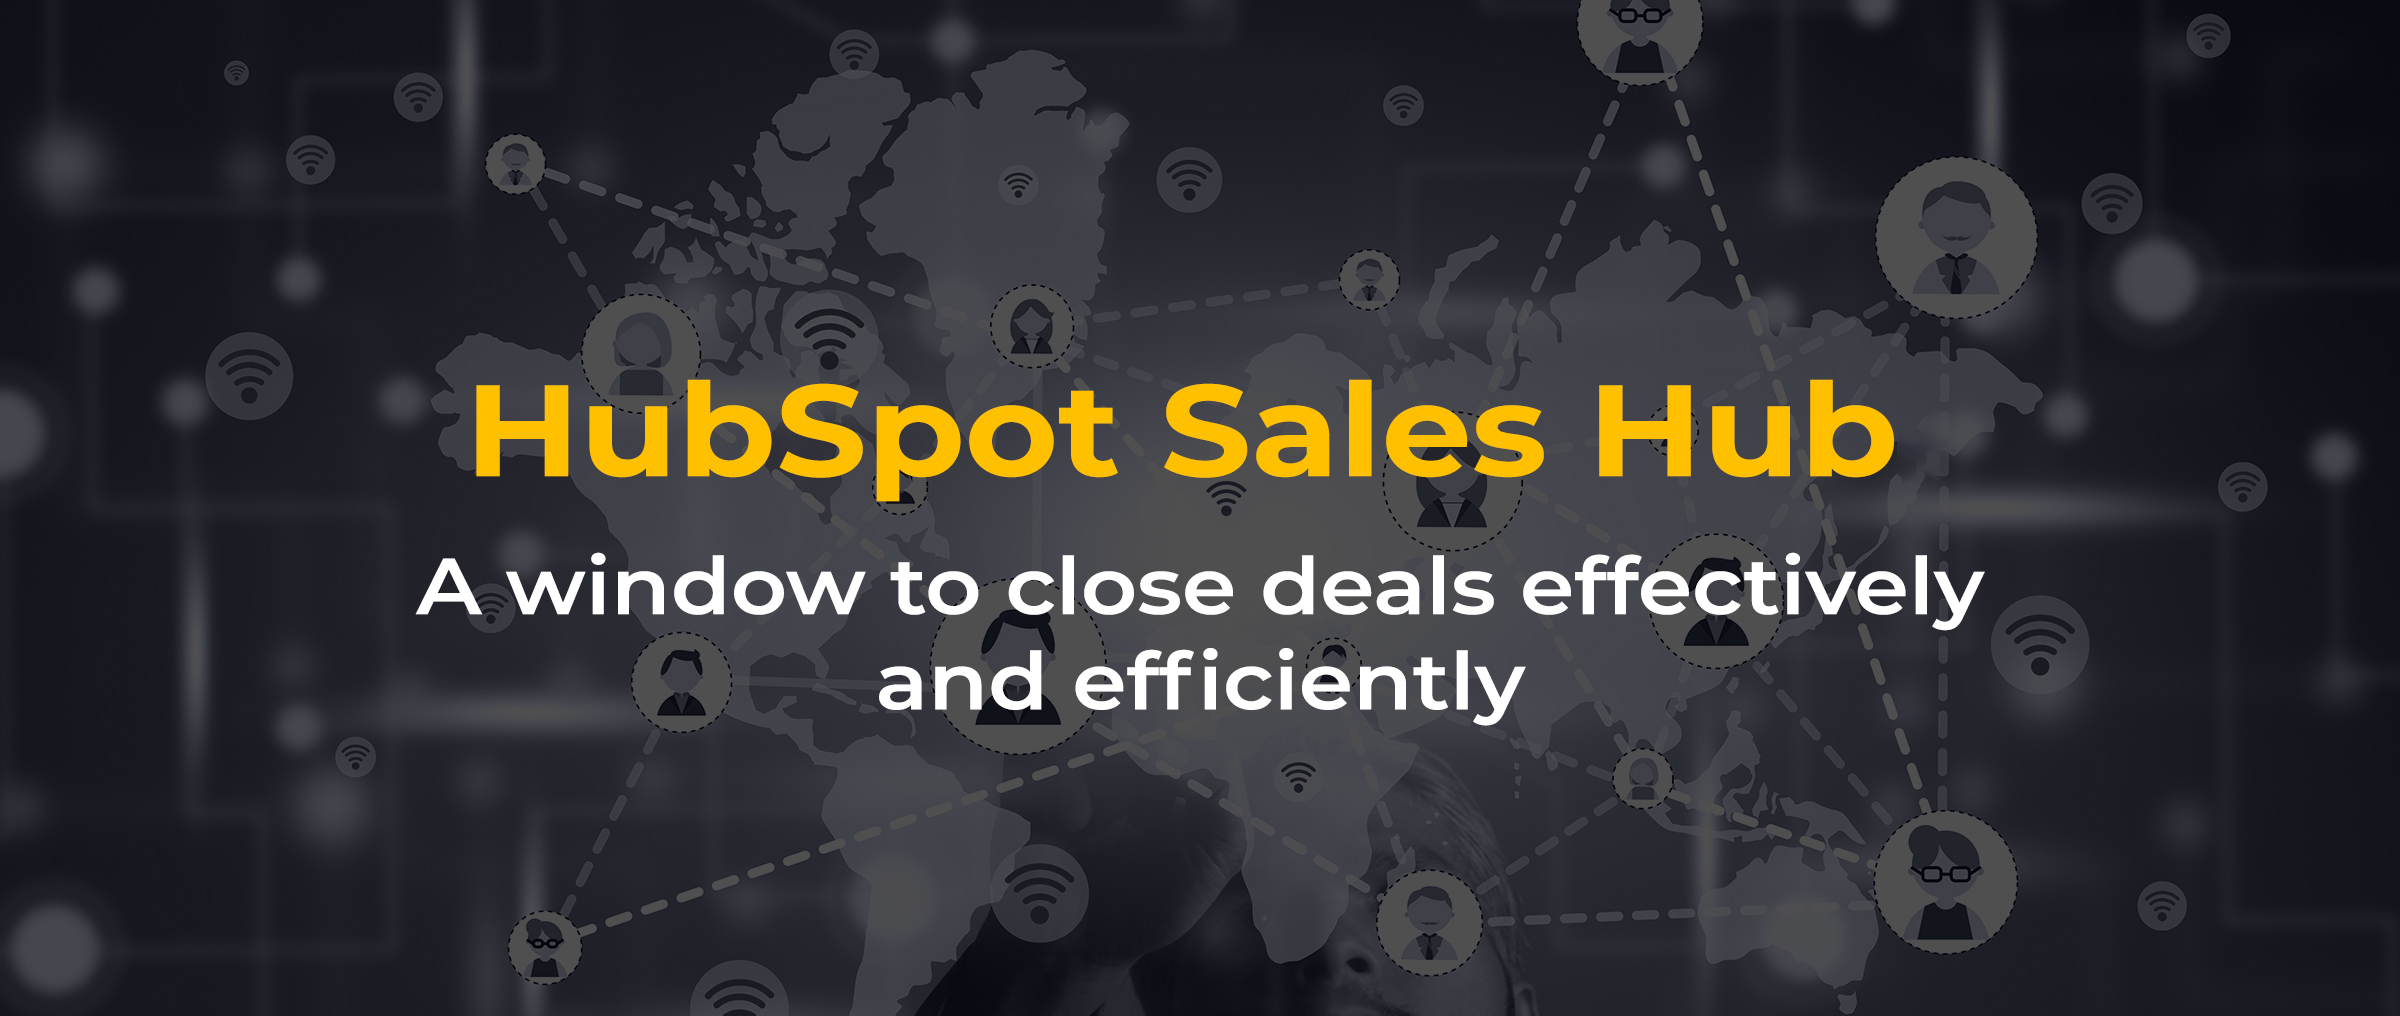 HubSpot Sales Hub: Enhancing Deal Closure Efficiency